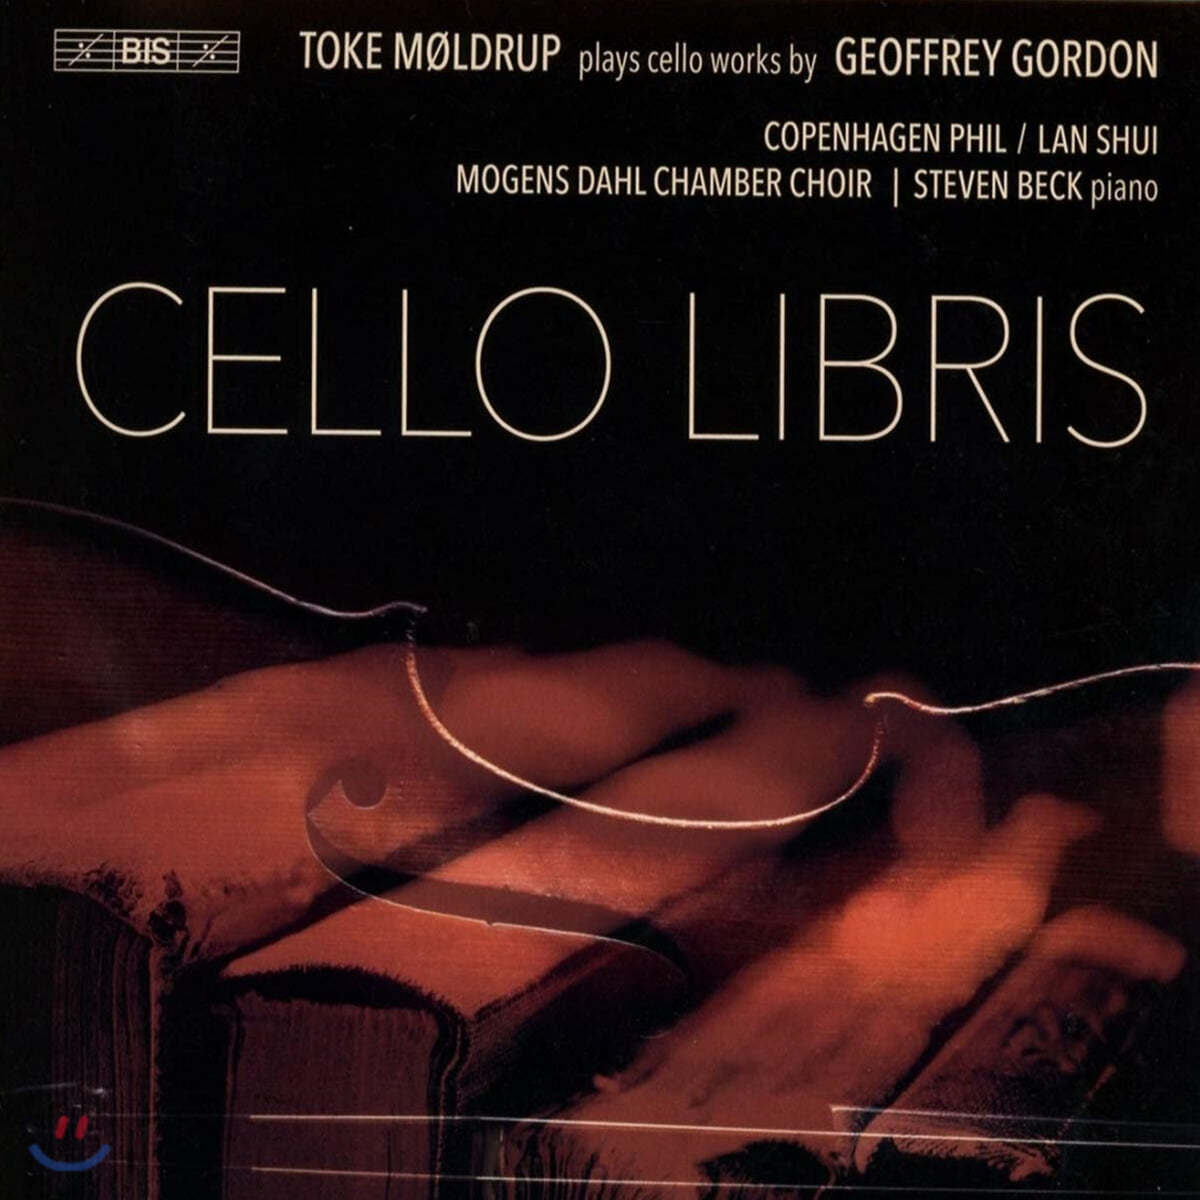 Toke Moldrup 제프리 고든: 작품집 (Cello Libris - Cello works by Geoffrey Gordon)